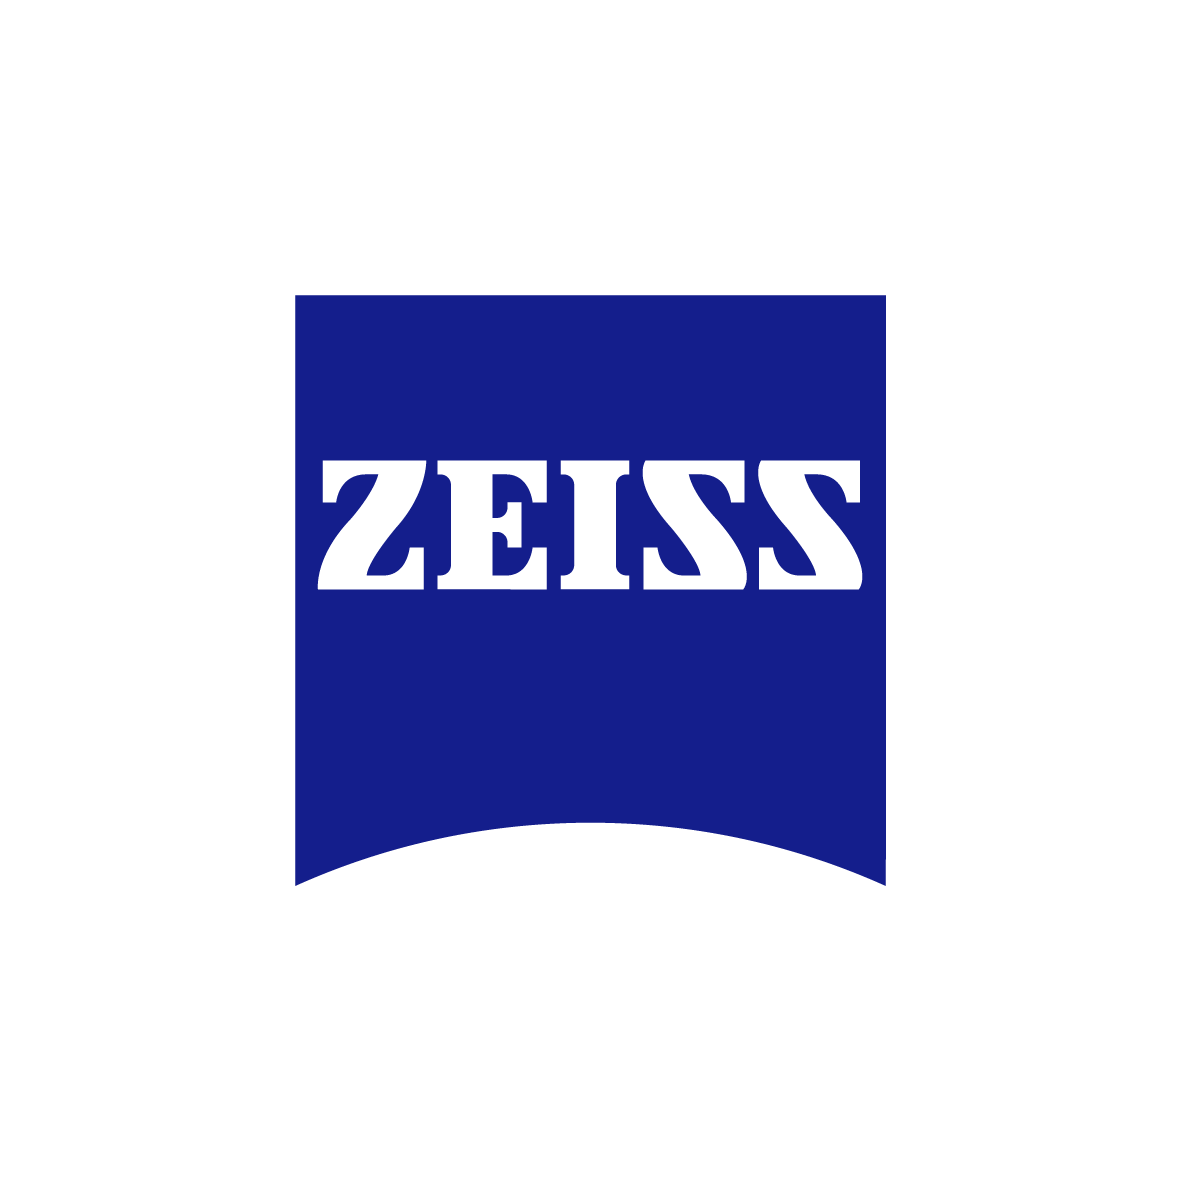 New Zeiss Logo - ZEISS Logo